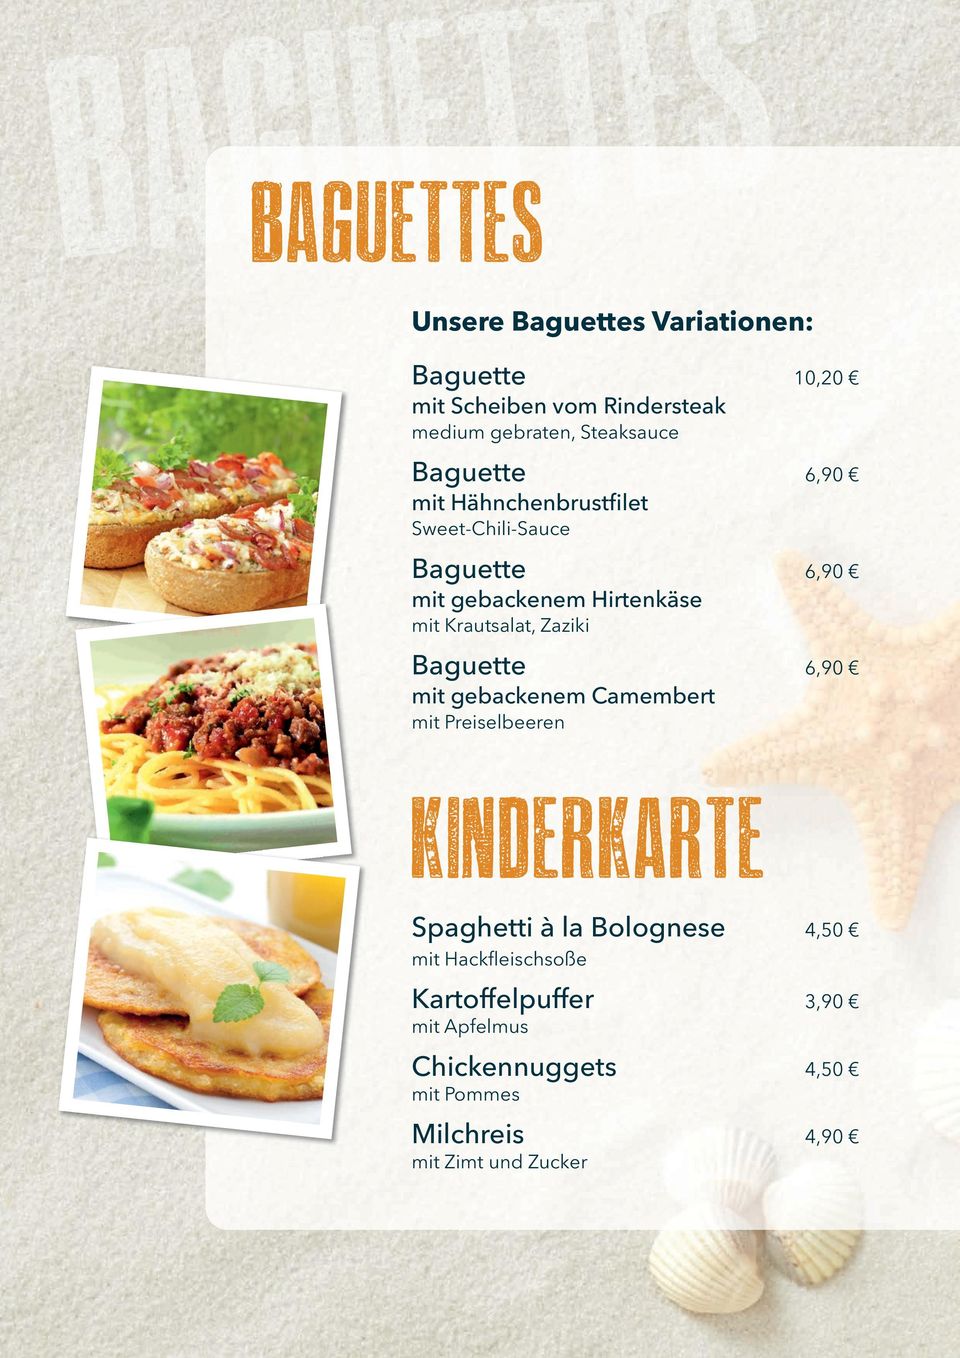 Zaziki Baguette 6,90 mit gebackenem Camembert mit Preiselbeeren KINDERKARTE Spaghetti à la Bolognese 4,50 mit